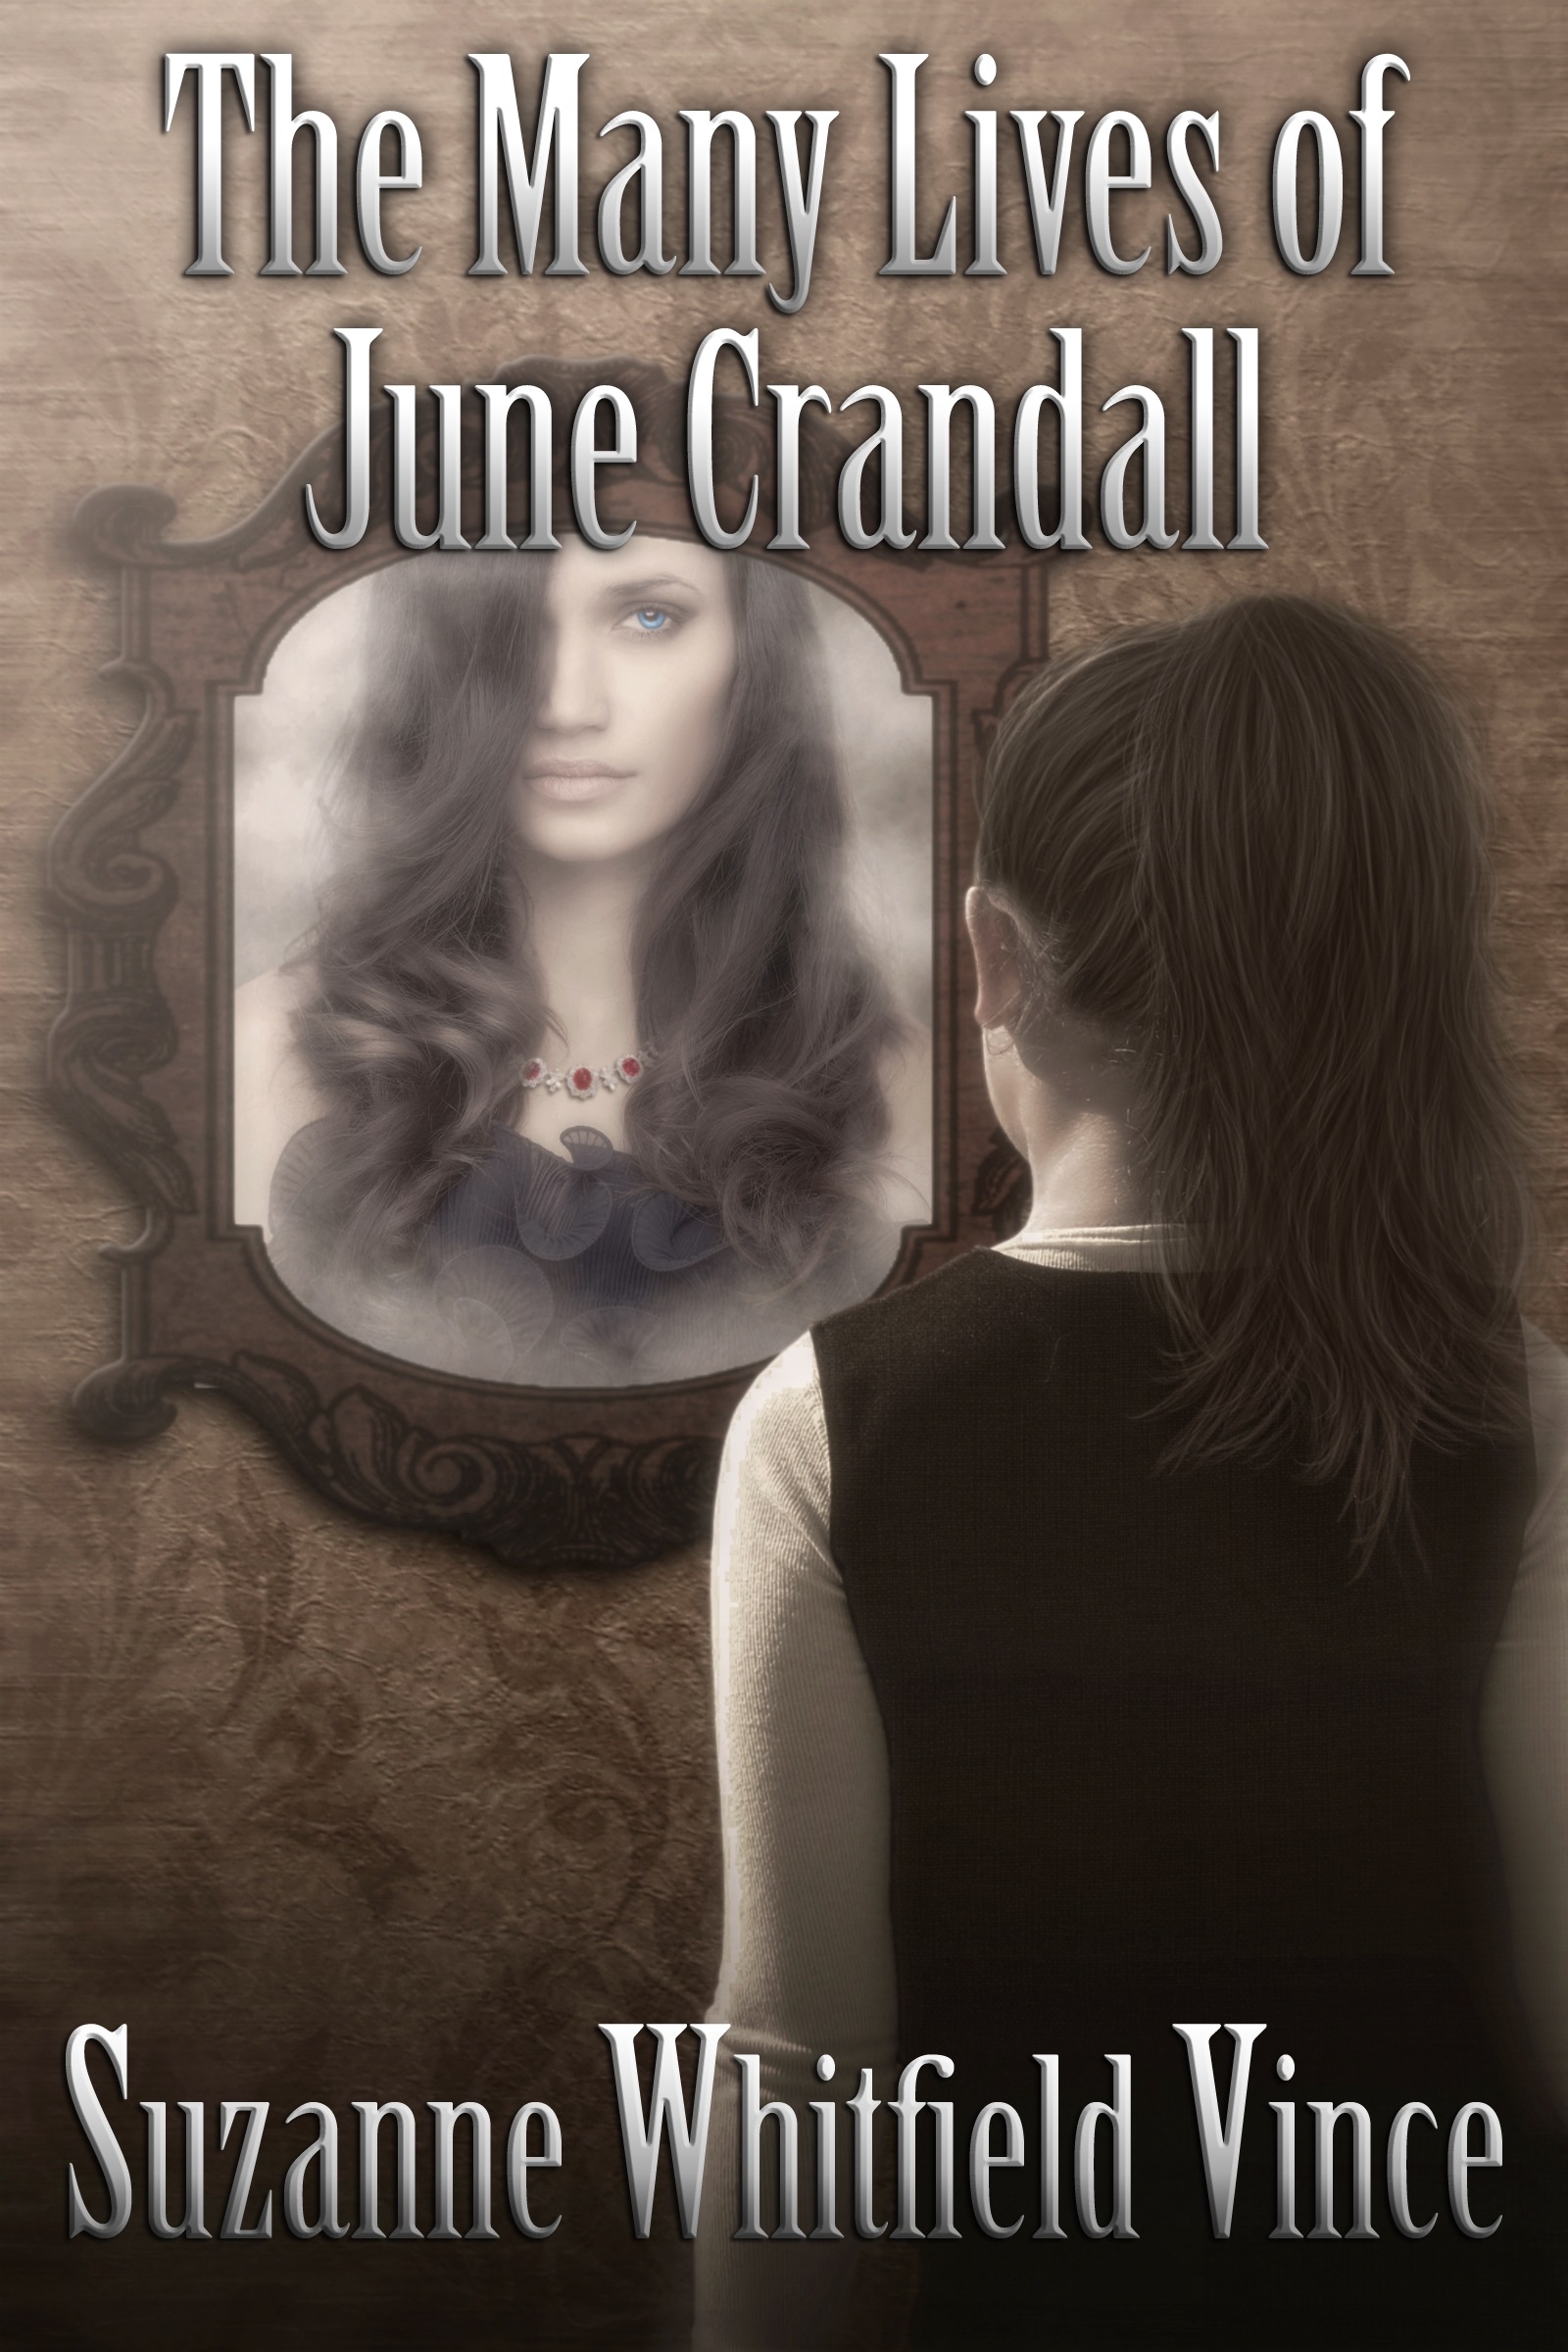 June Crandall